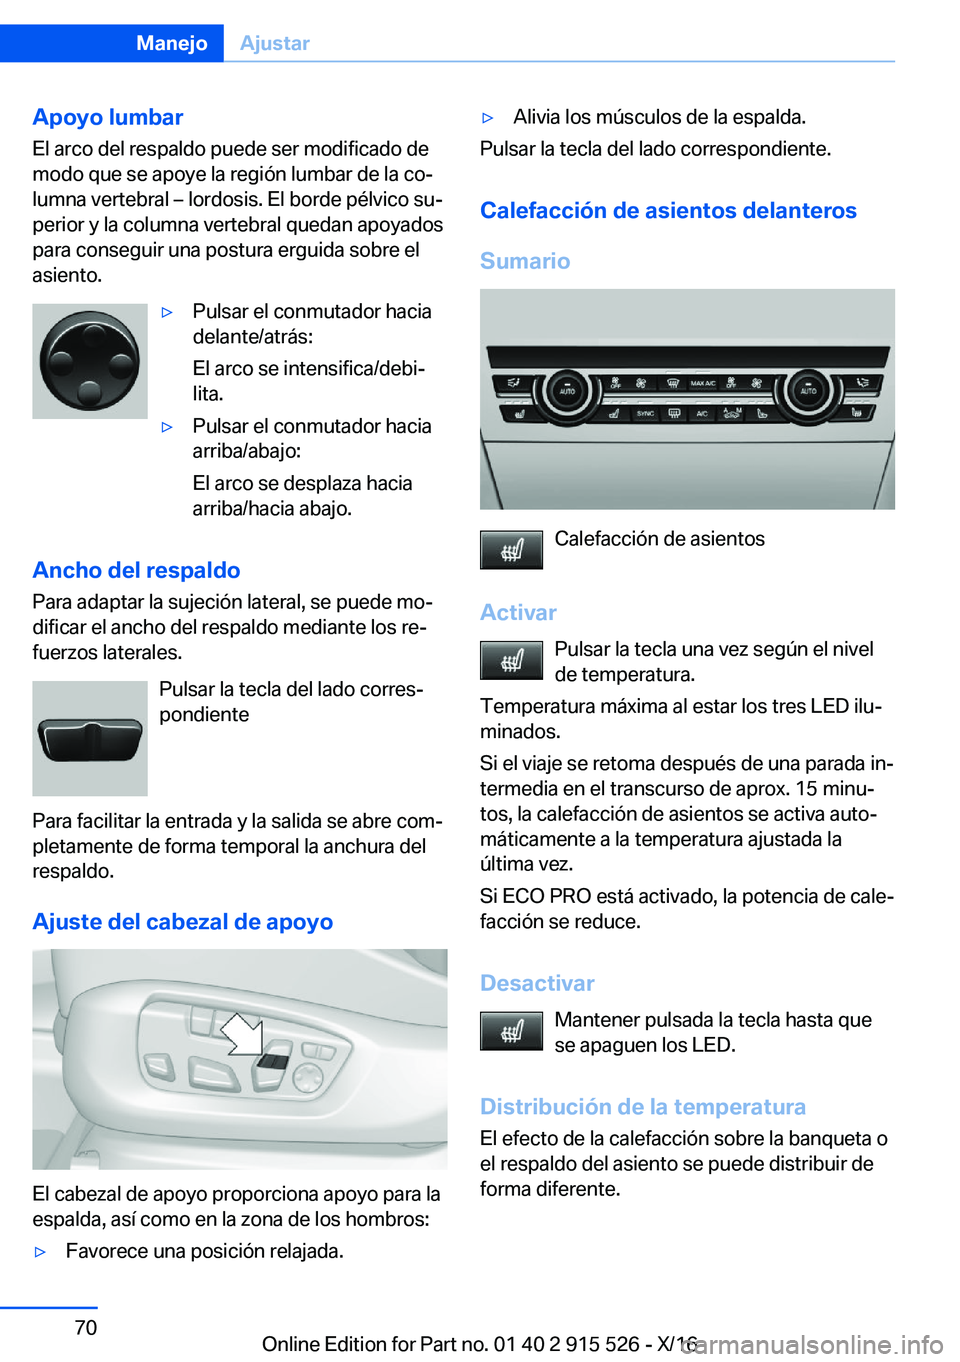 BMW X5 2017  Manuales de Empleo (in Spanish) �A�p�o�y�o��l�u�m�b�a�r�E�l� �a�r�c�o� �d�e�l� �r�e�s�p�a�l�d�o� �p�u�e�d�e� �s�e�r� �m�o�d�i�f�i�c�a�d�o� �d�e
�m�o�d�o� �q�u�e� �s�e� �a�p�o�y�e� �l�a� �r�e�g�i�